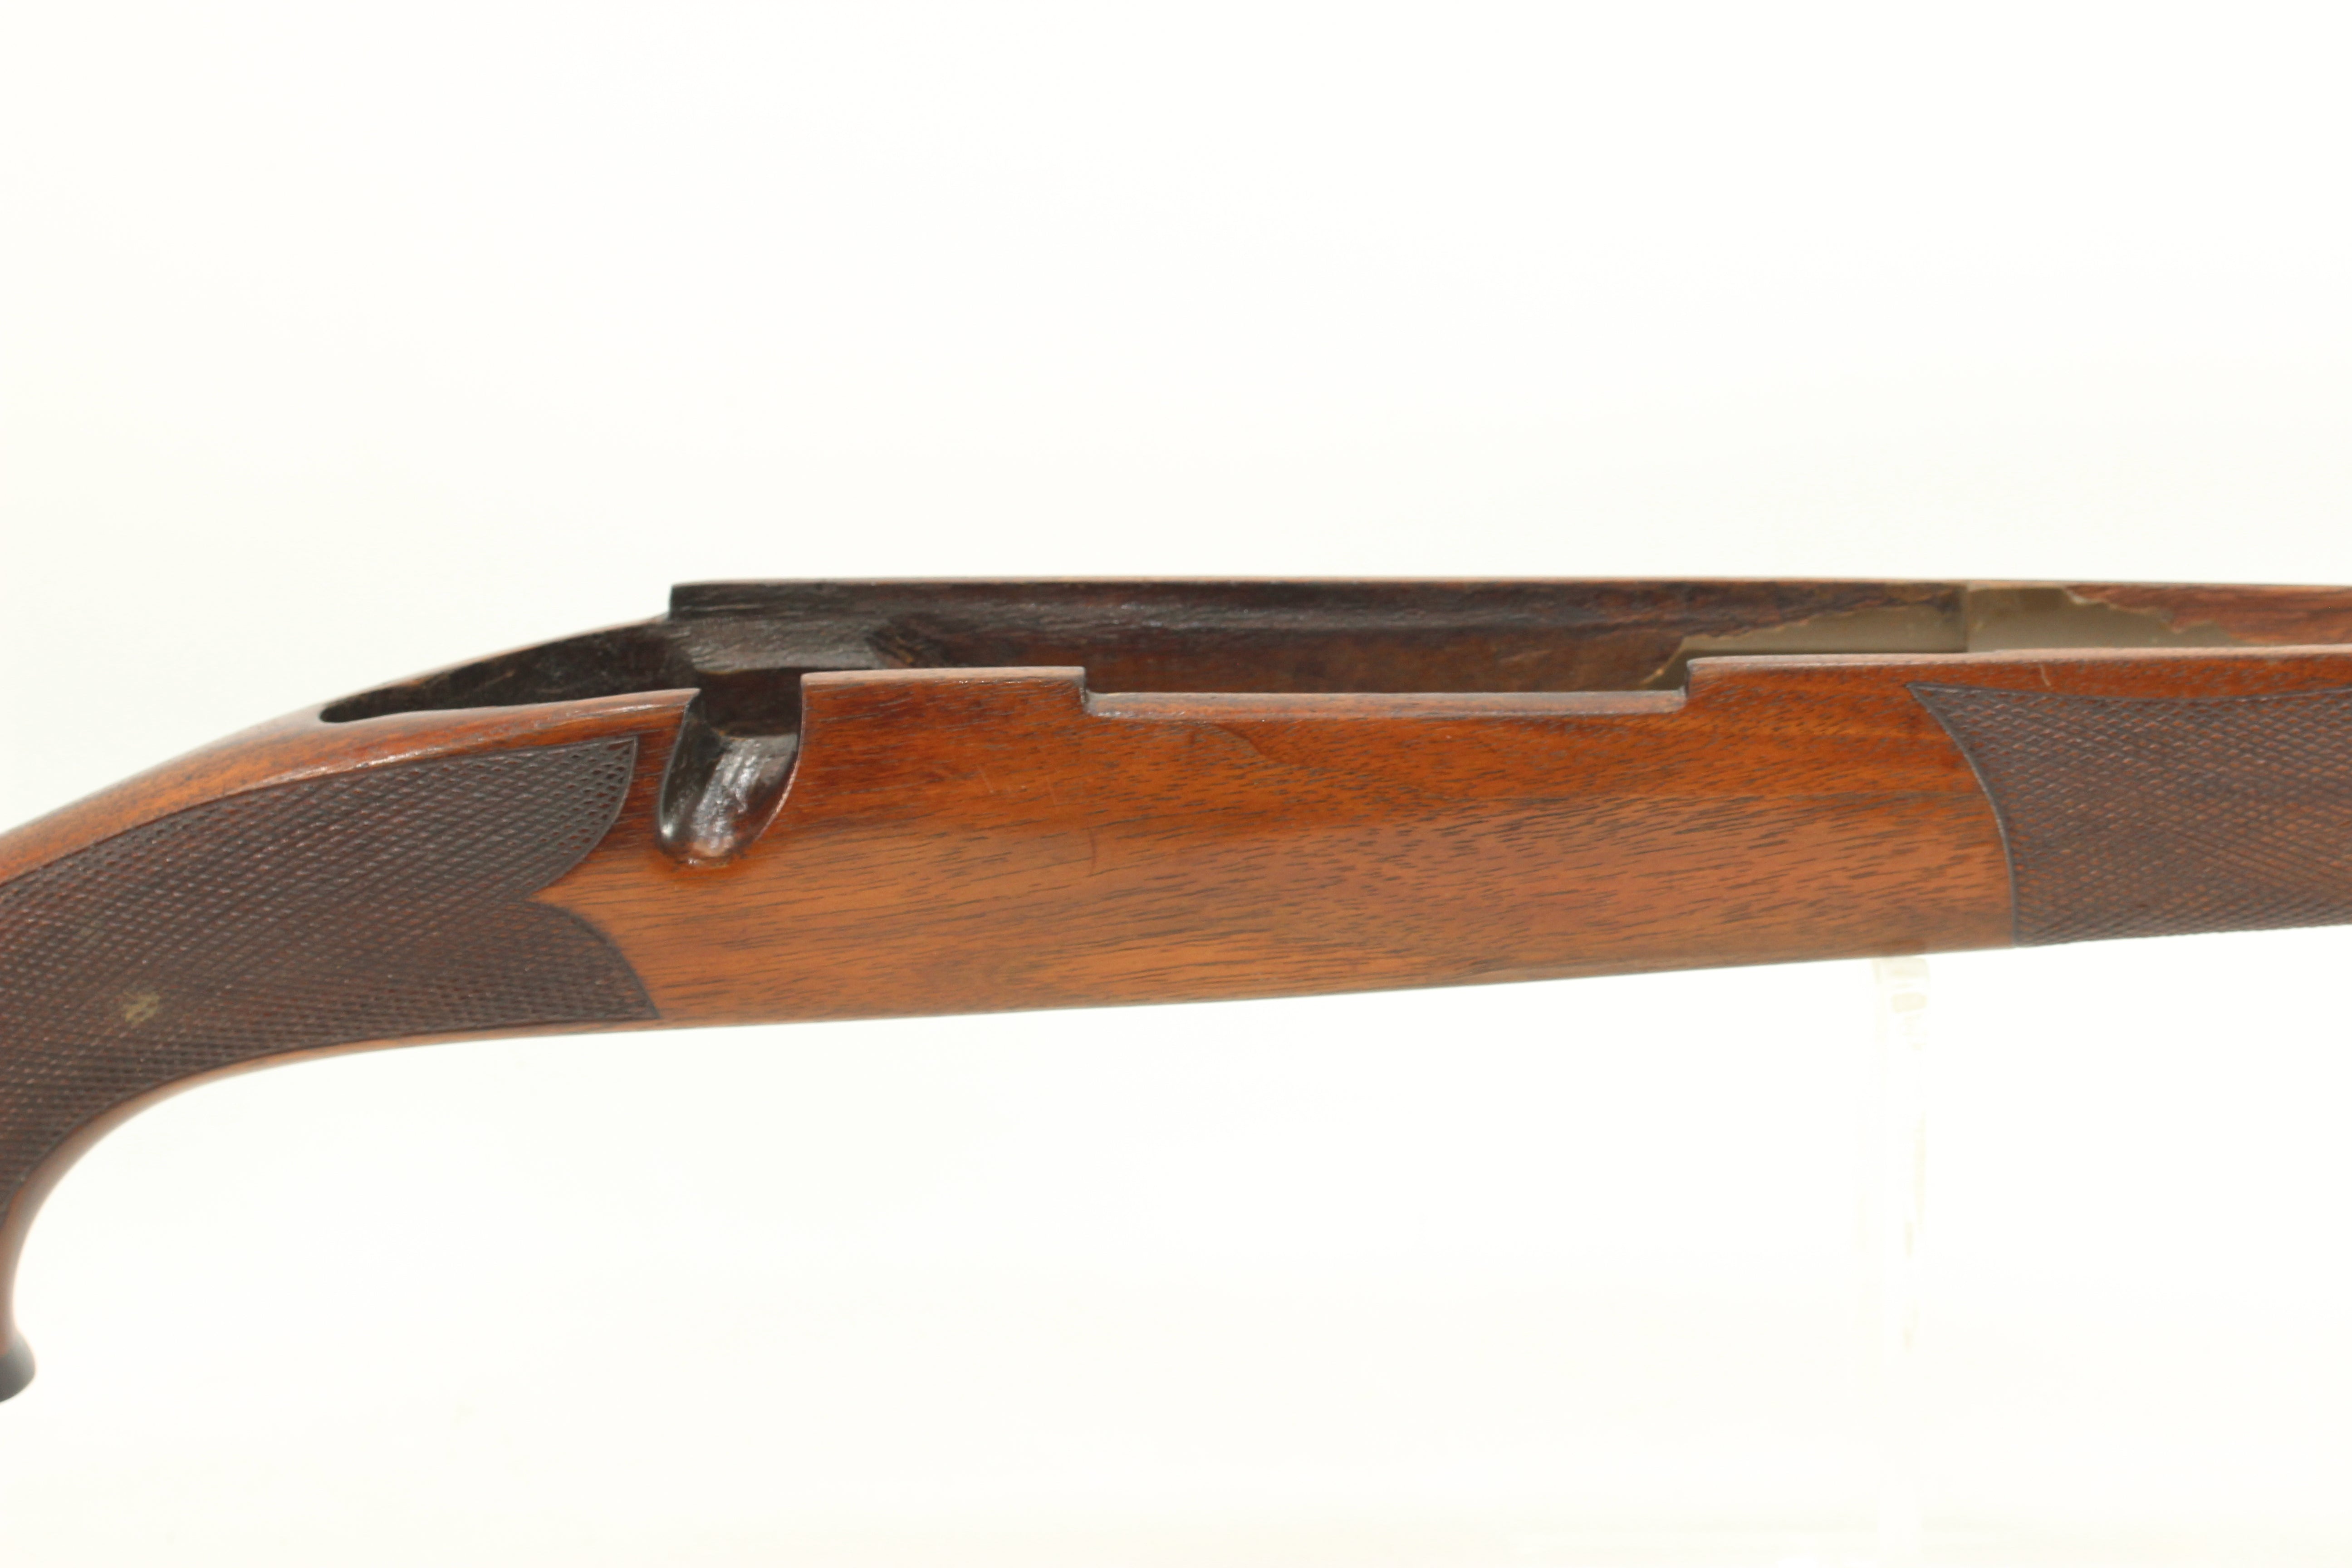 Custom Stock - Pre-War Standard Rifle